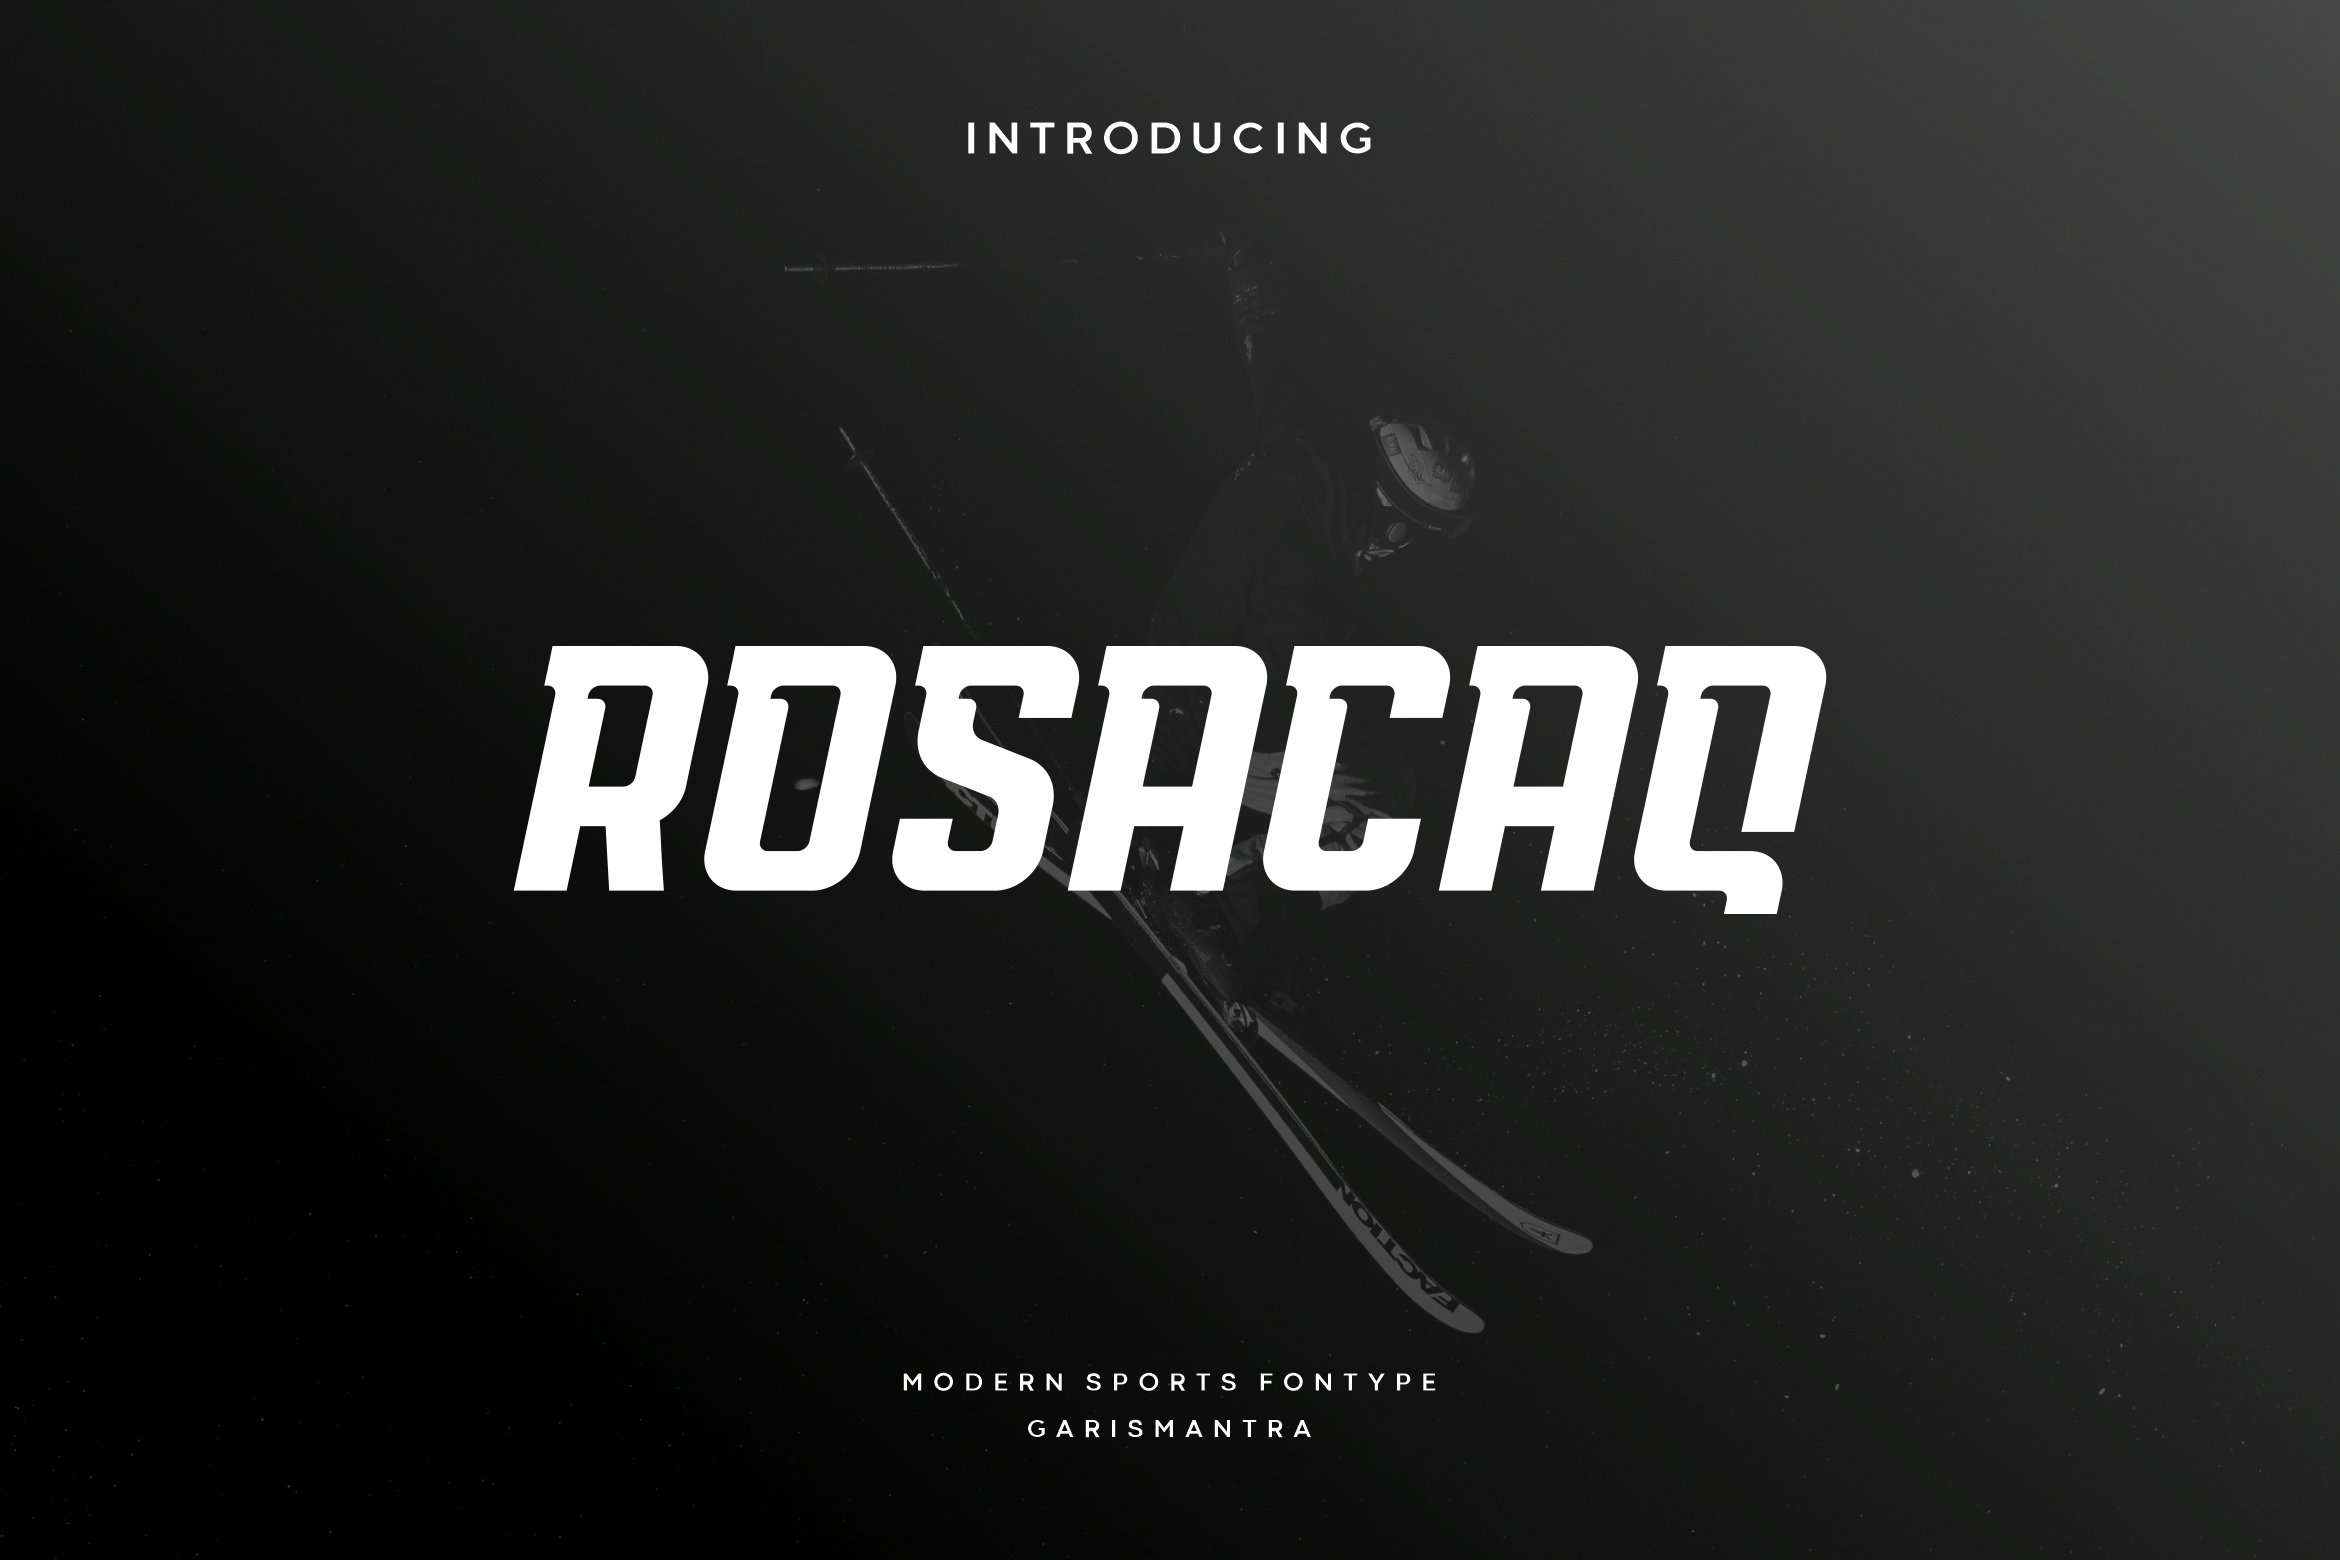 Rosacaq cover image.